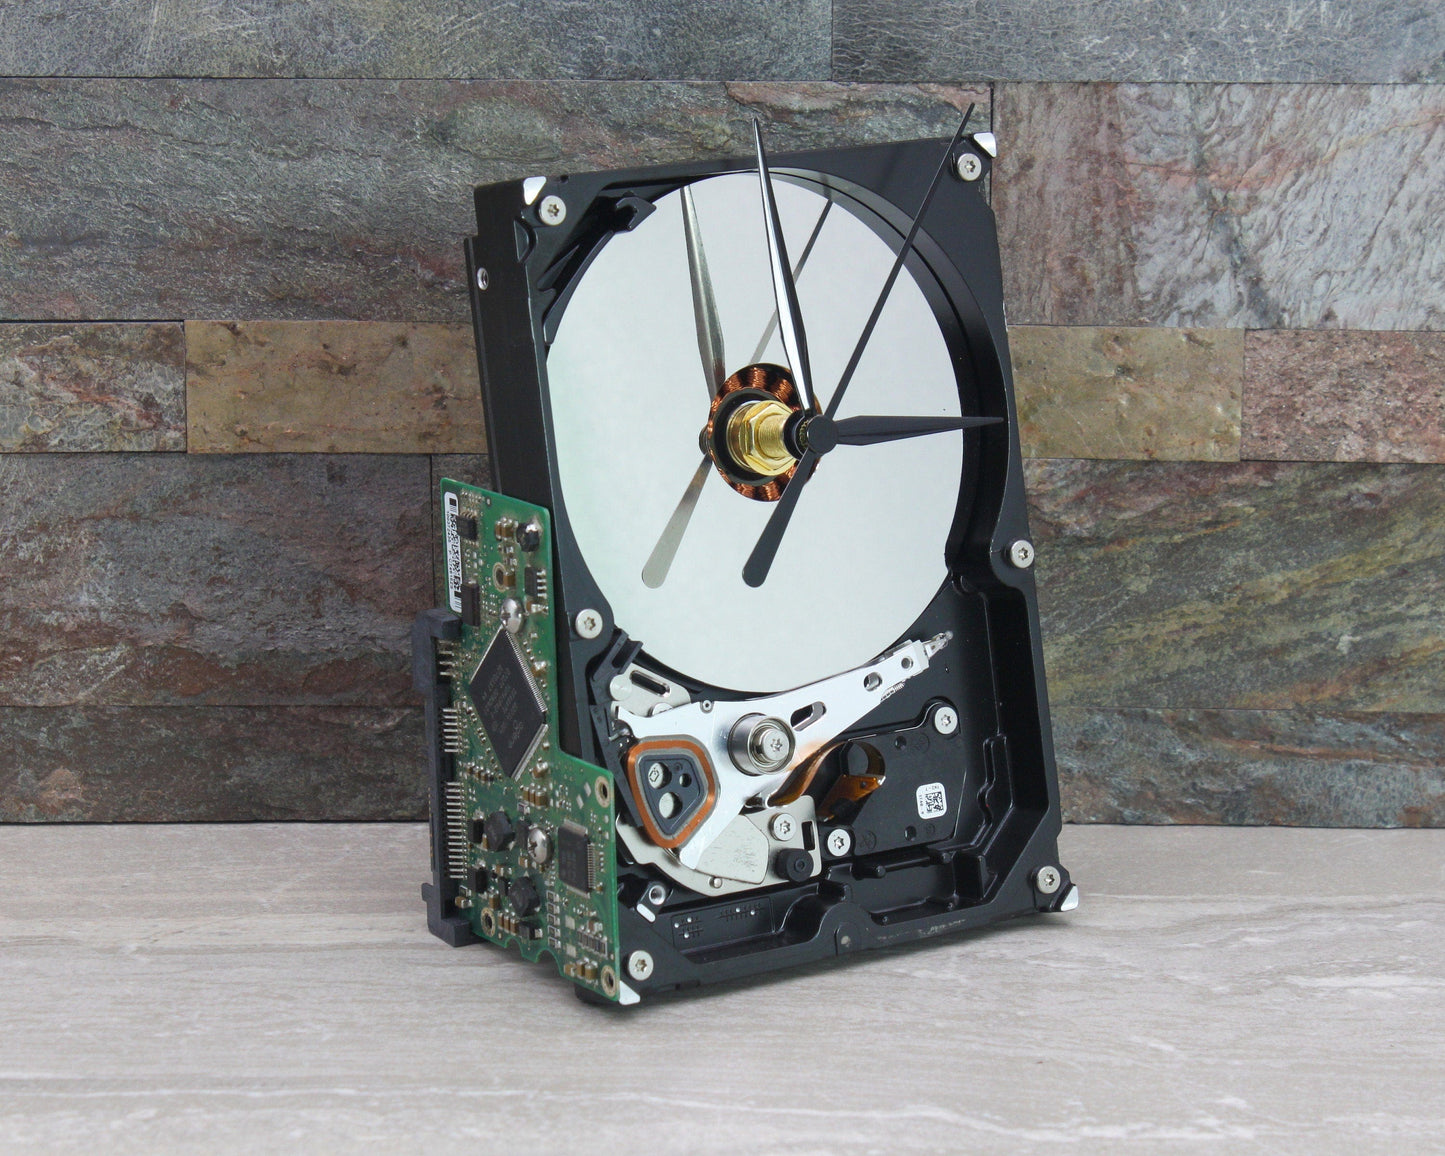 LightAndTimeArt Harddrive Clock Upcycled Black & Silver Open Center Hard Drive Clock - Modern Desk Clock - Gift for geeks, nerds, office, new job gift, industrial IT design